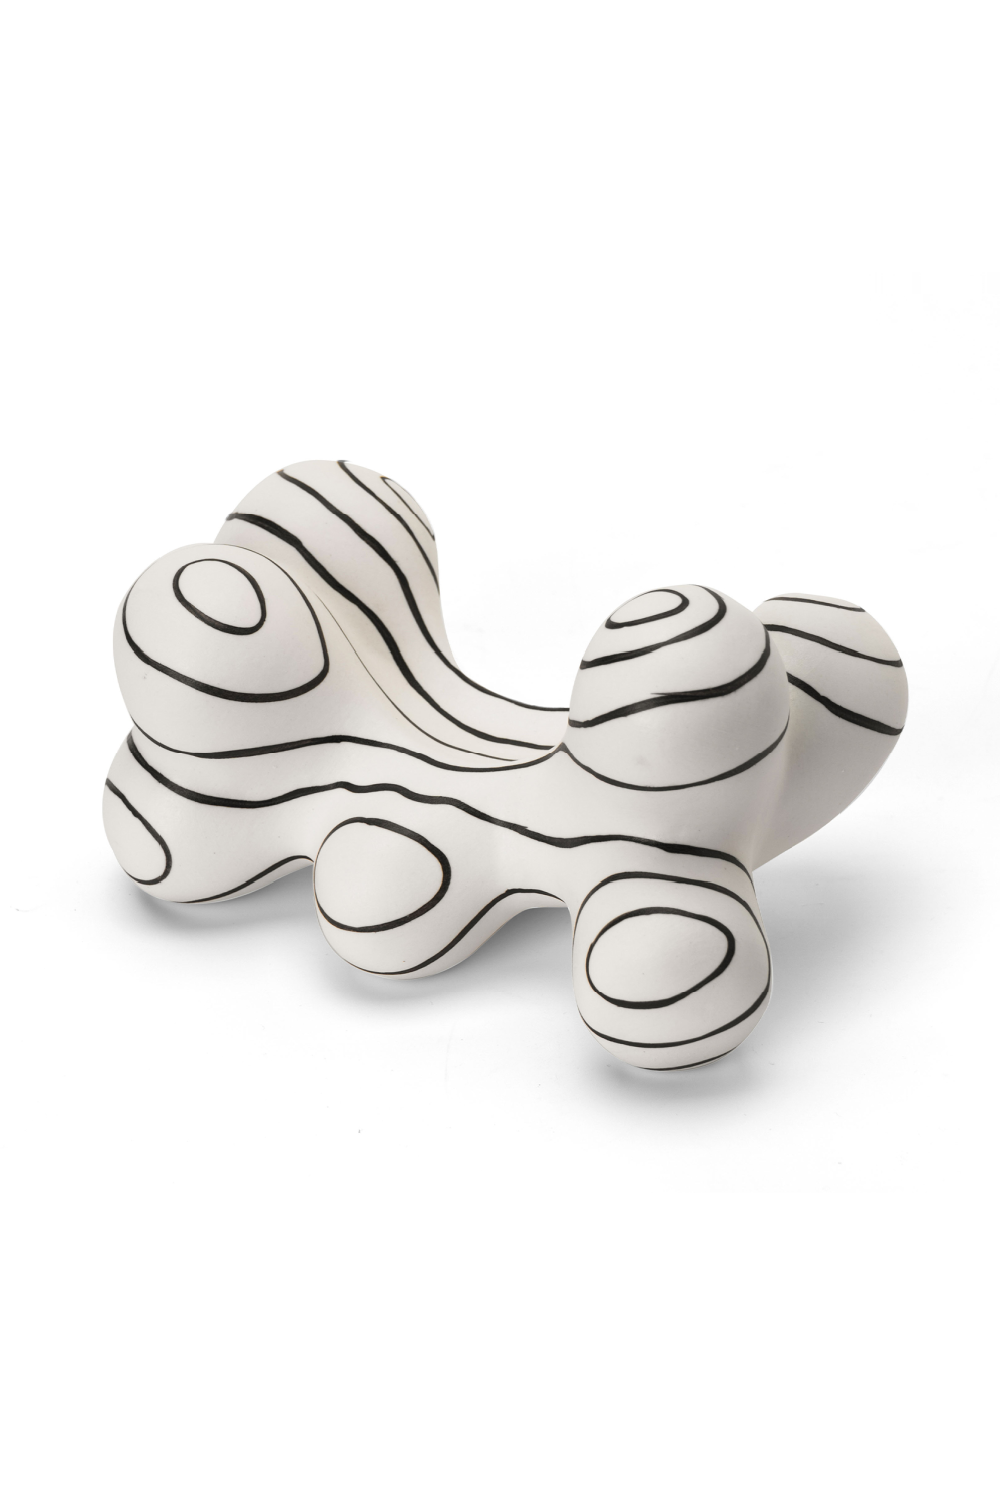 Abstract Ceramic Sculpture | Liang & Eimil Cato II | OROA.com